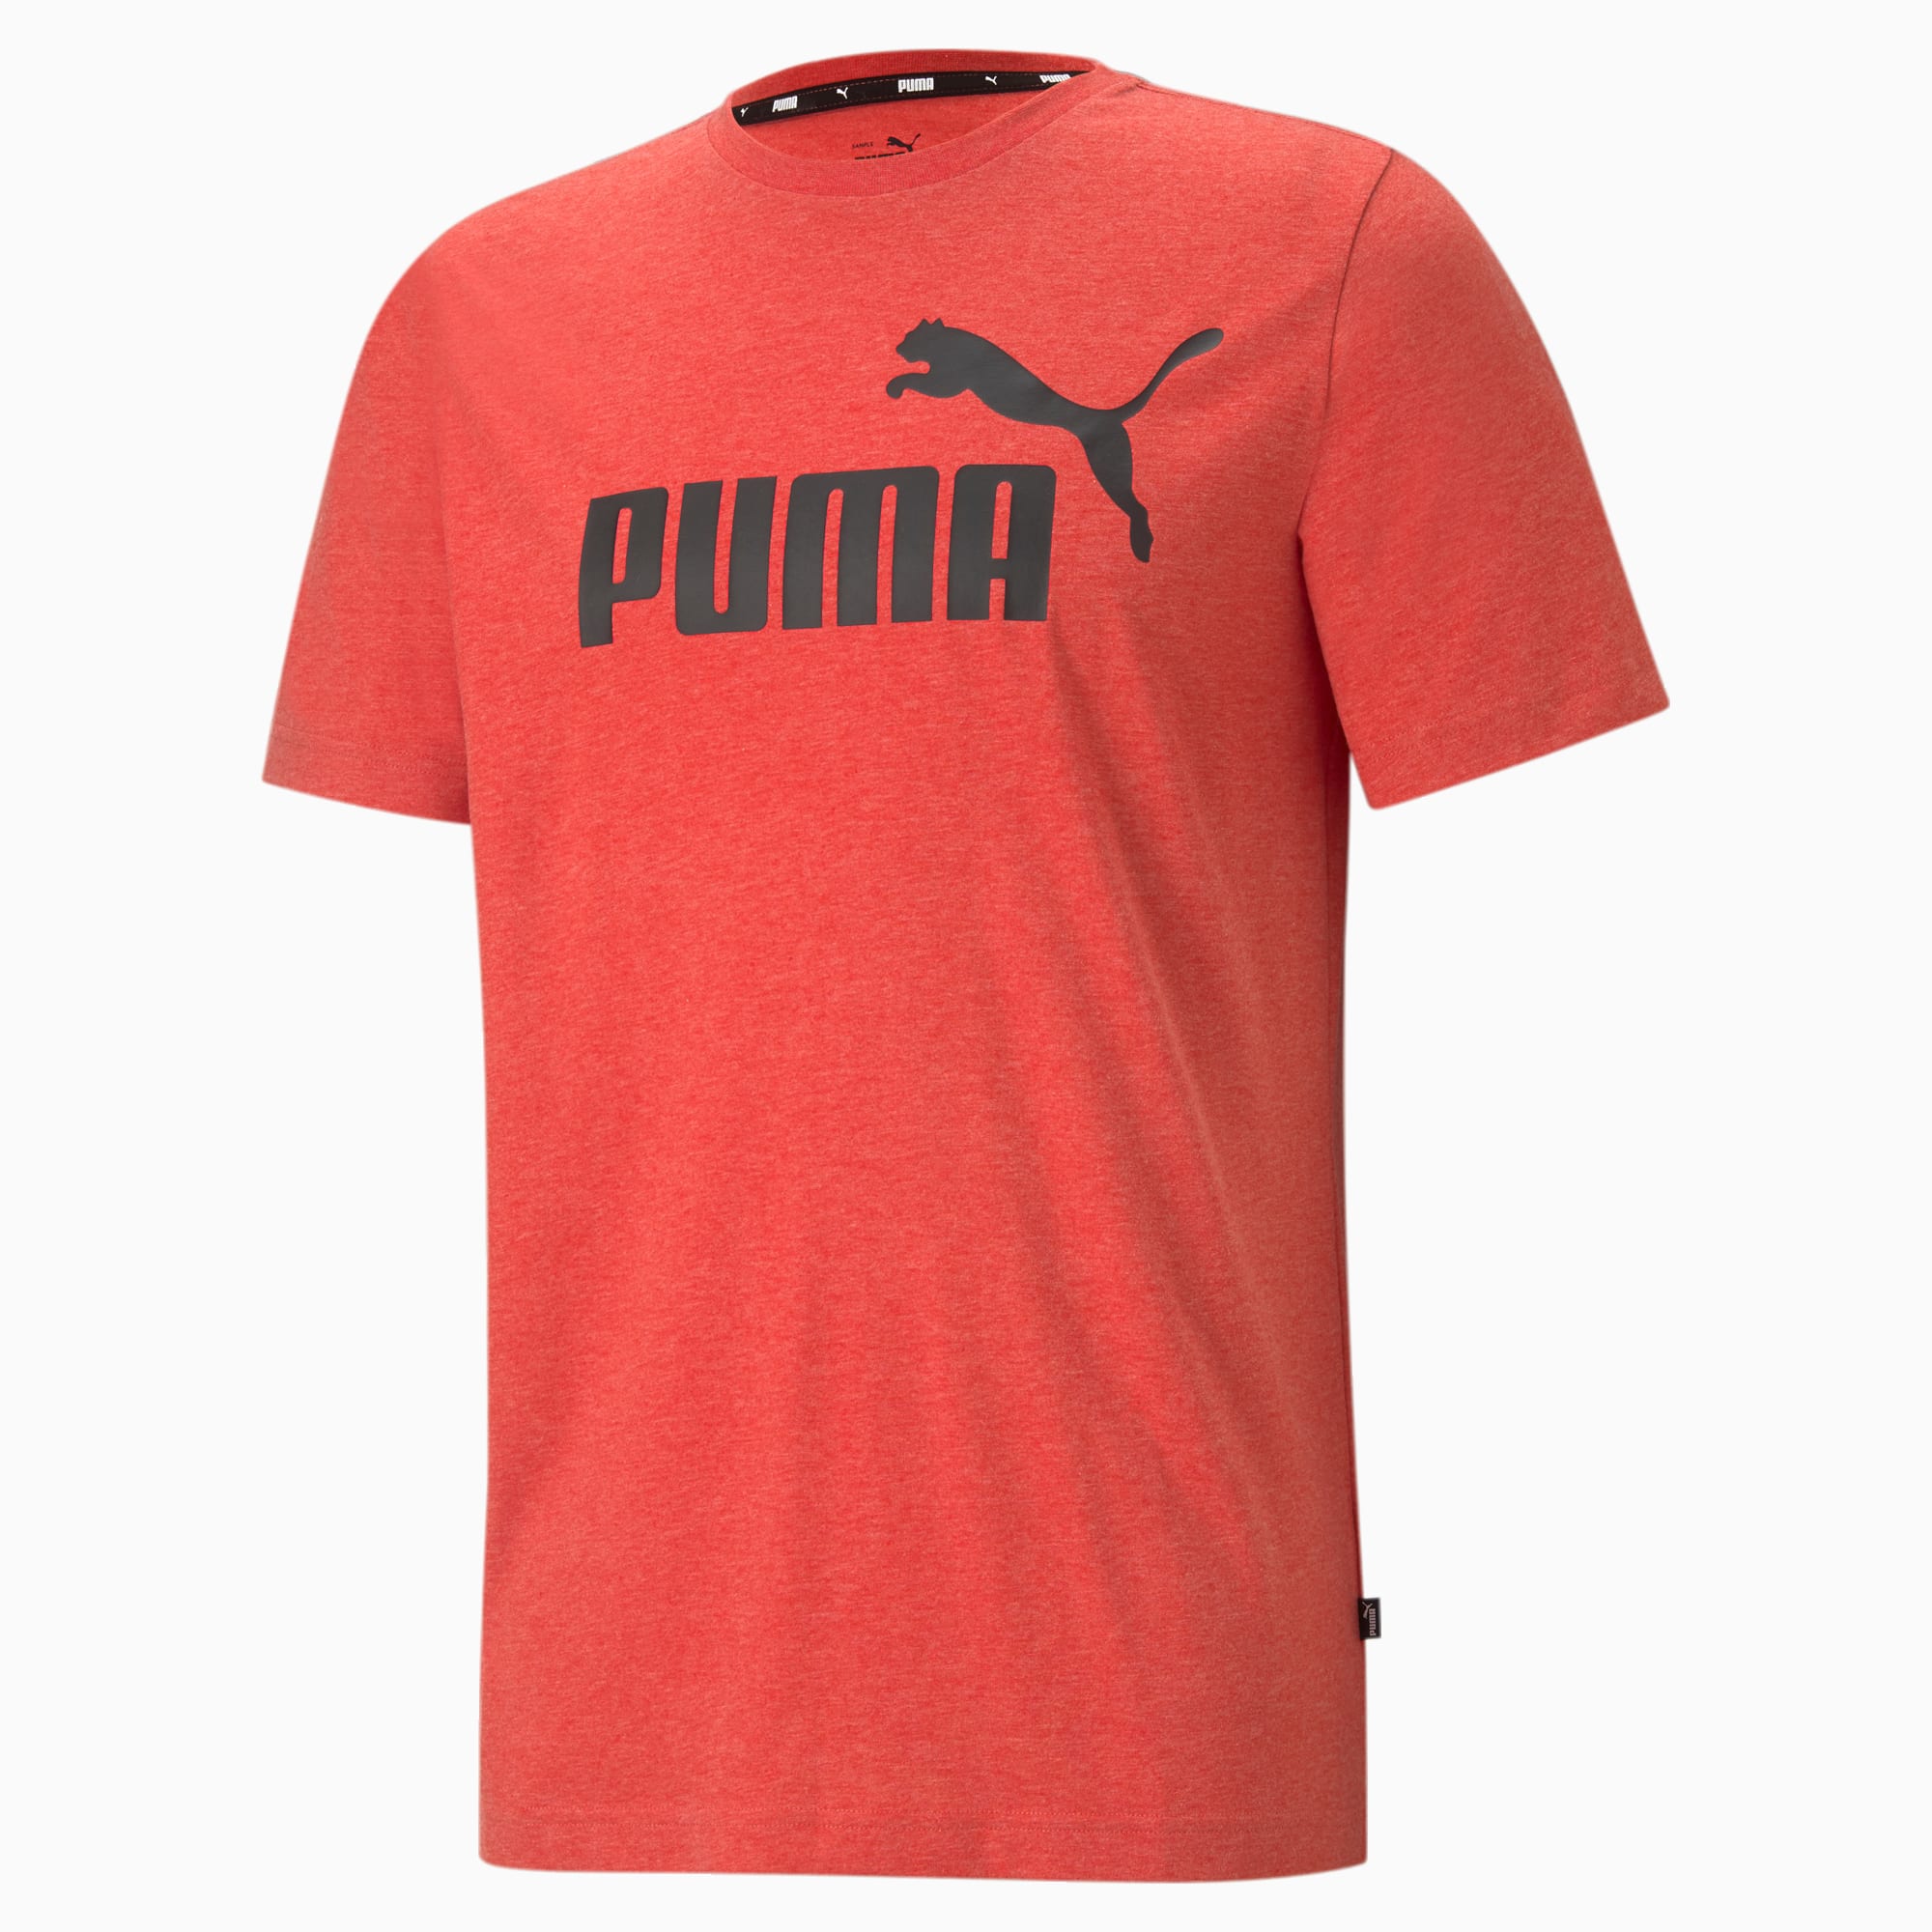 PUMA Essentials Heather Men's T-Shirt, High Risk Red, Size XL, Clothing